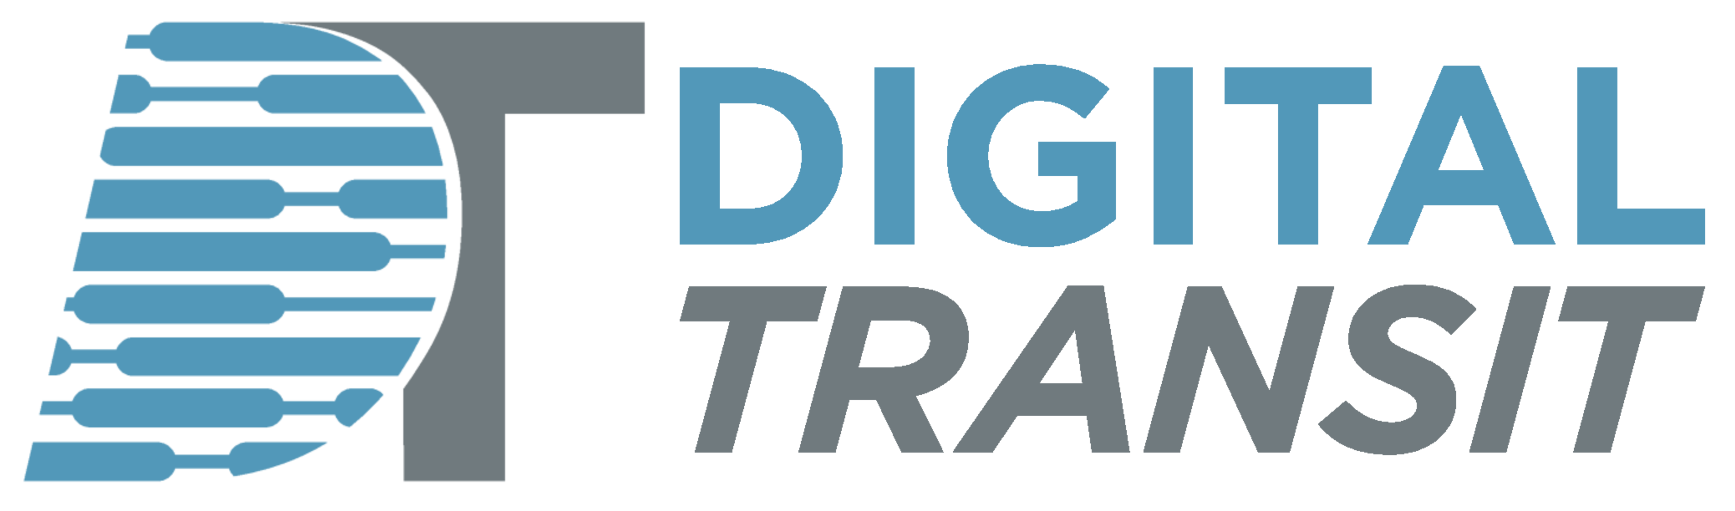 Digital Transit Limited